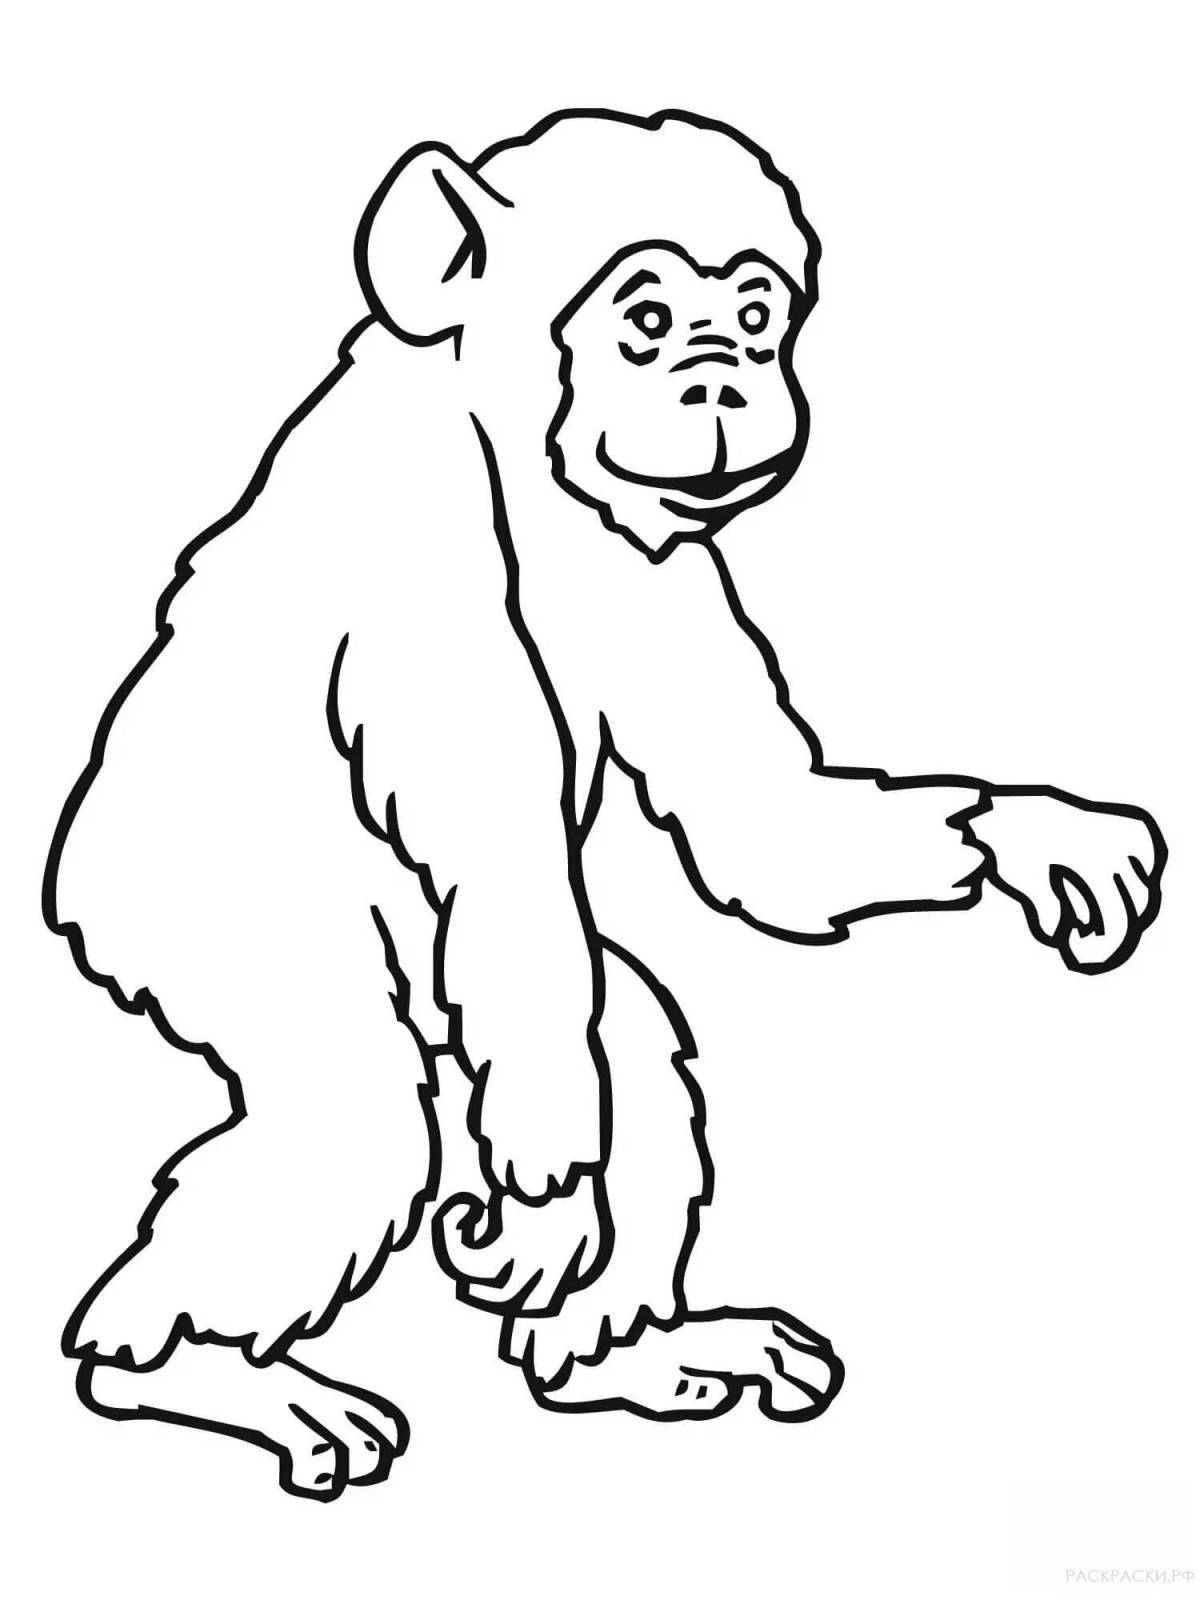 Chimpanzee coloring page